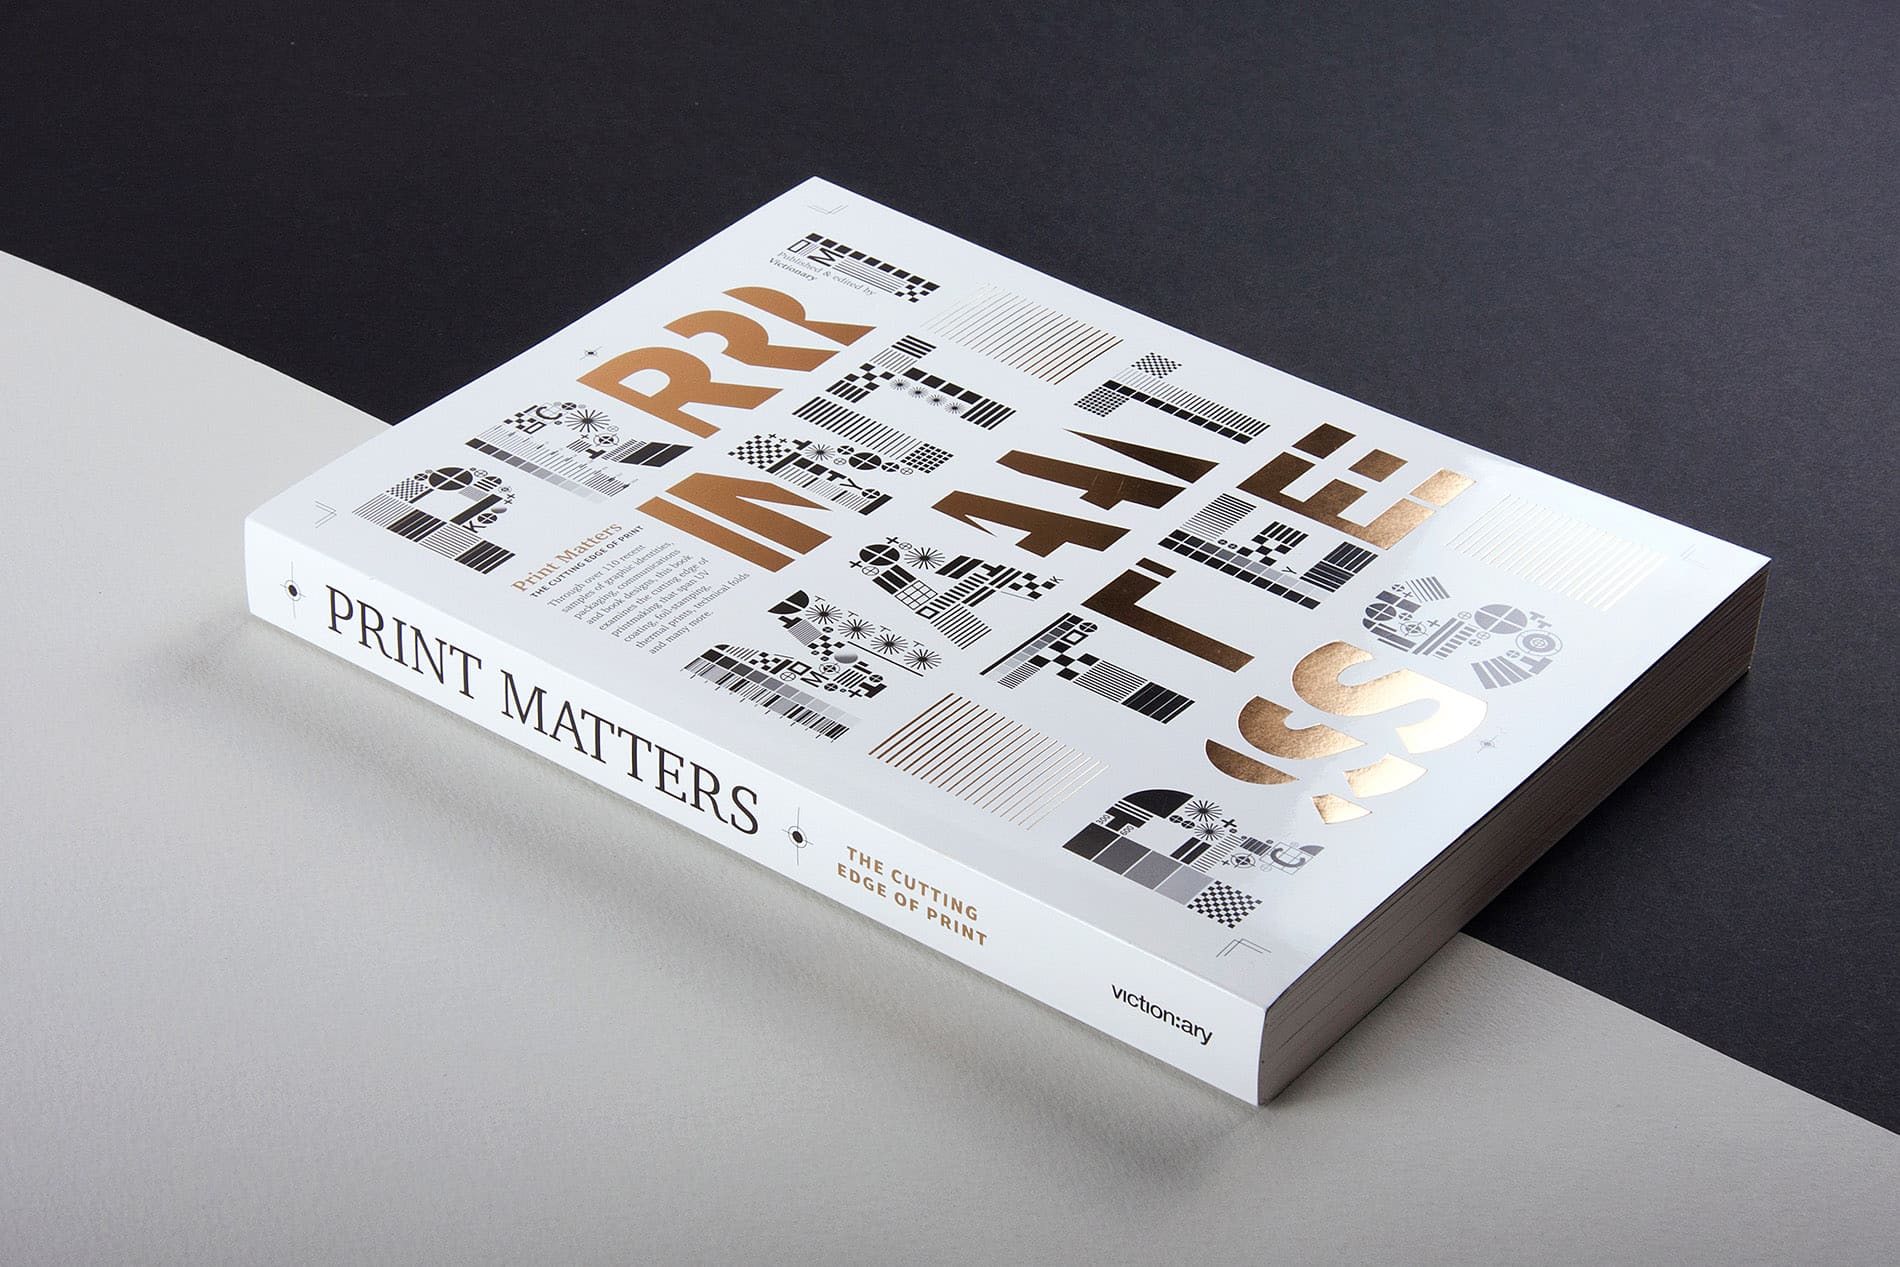 Print Matters: The Cutting Edge of Print [Book]